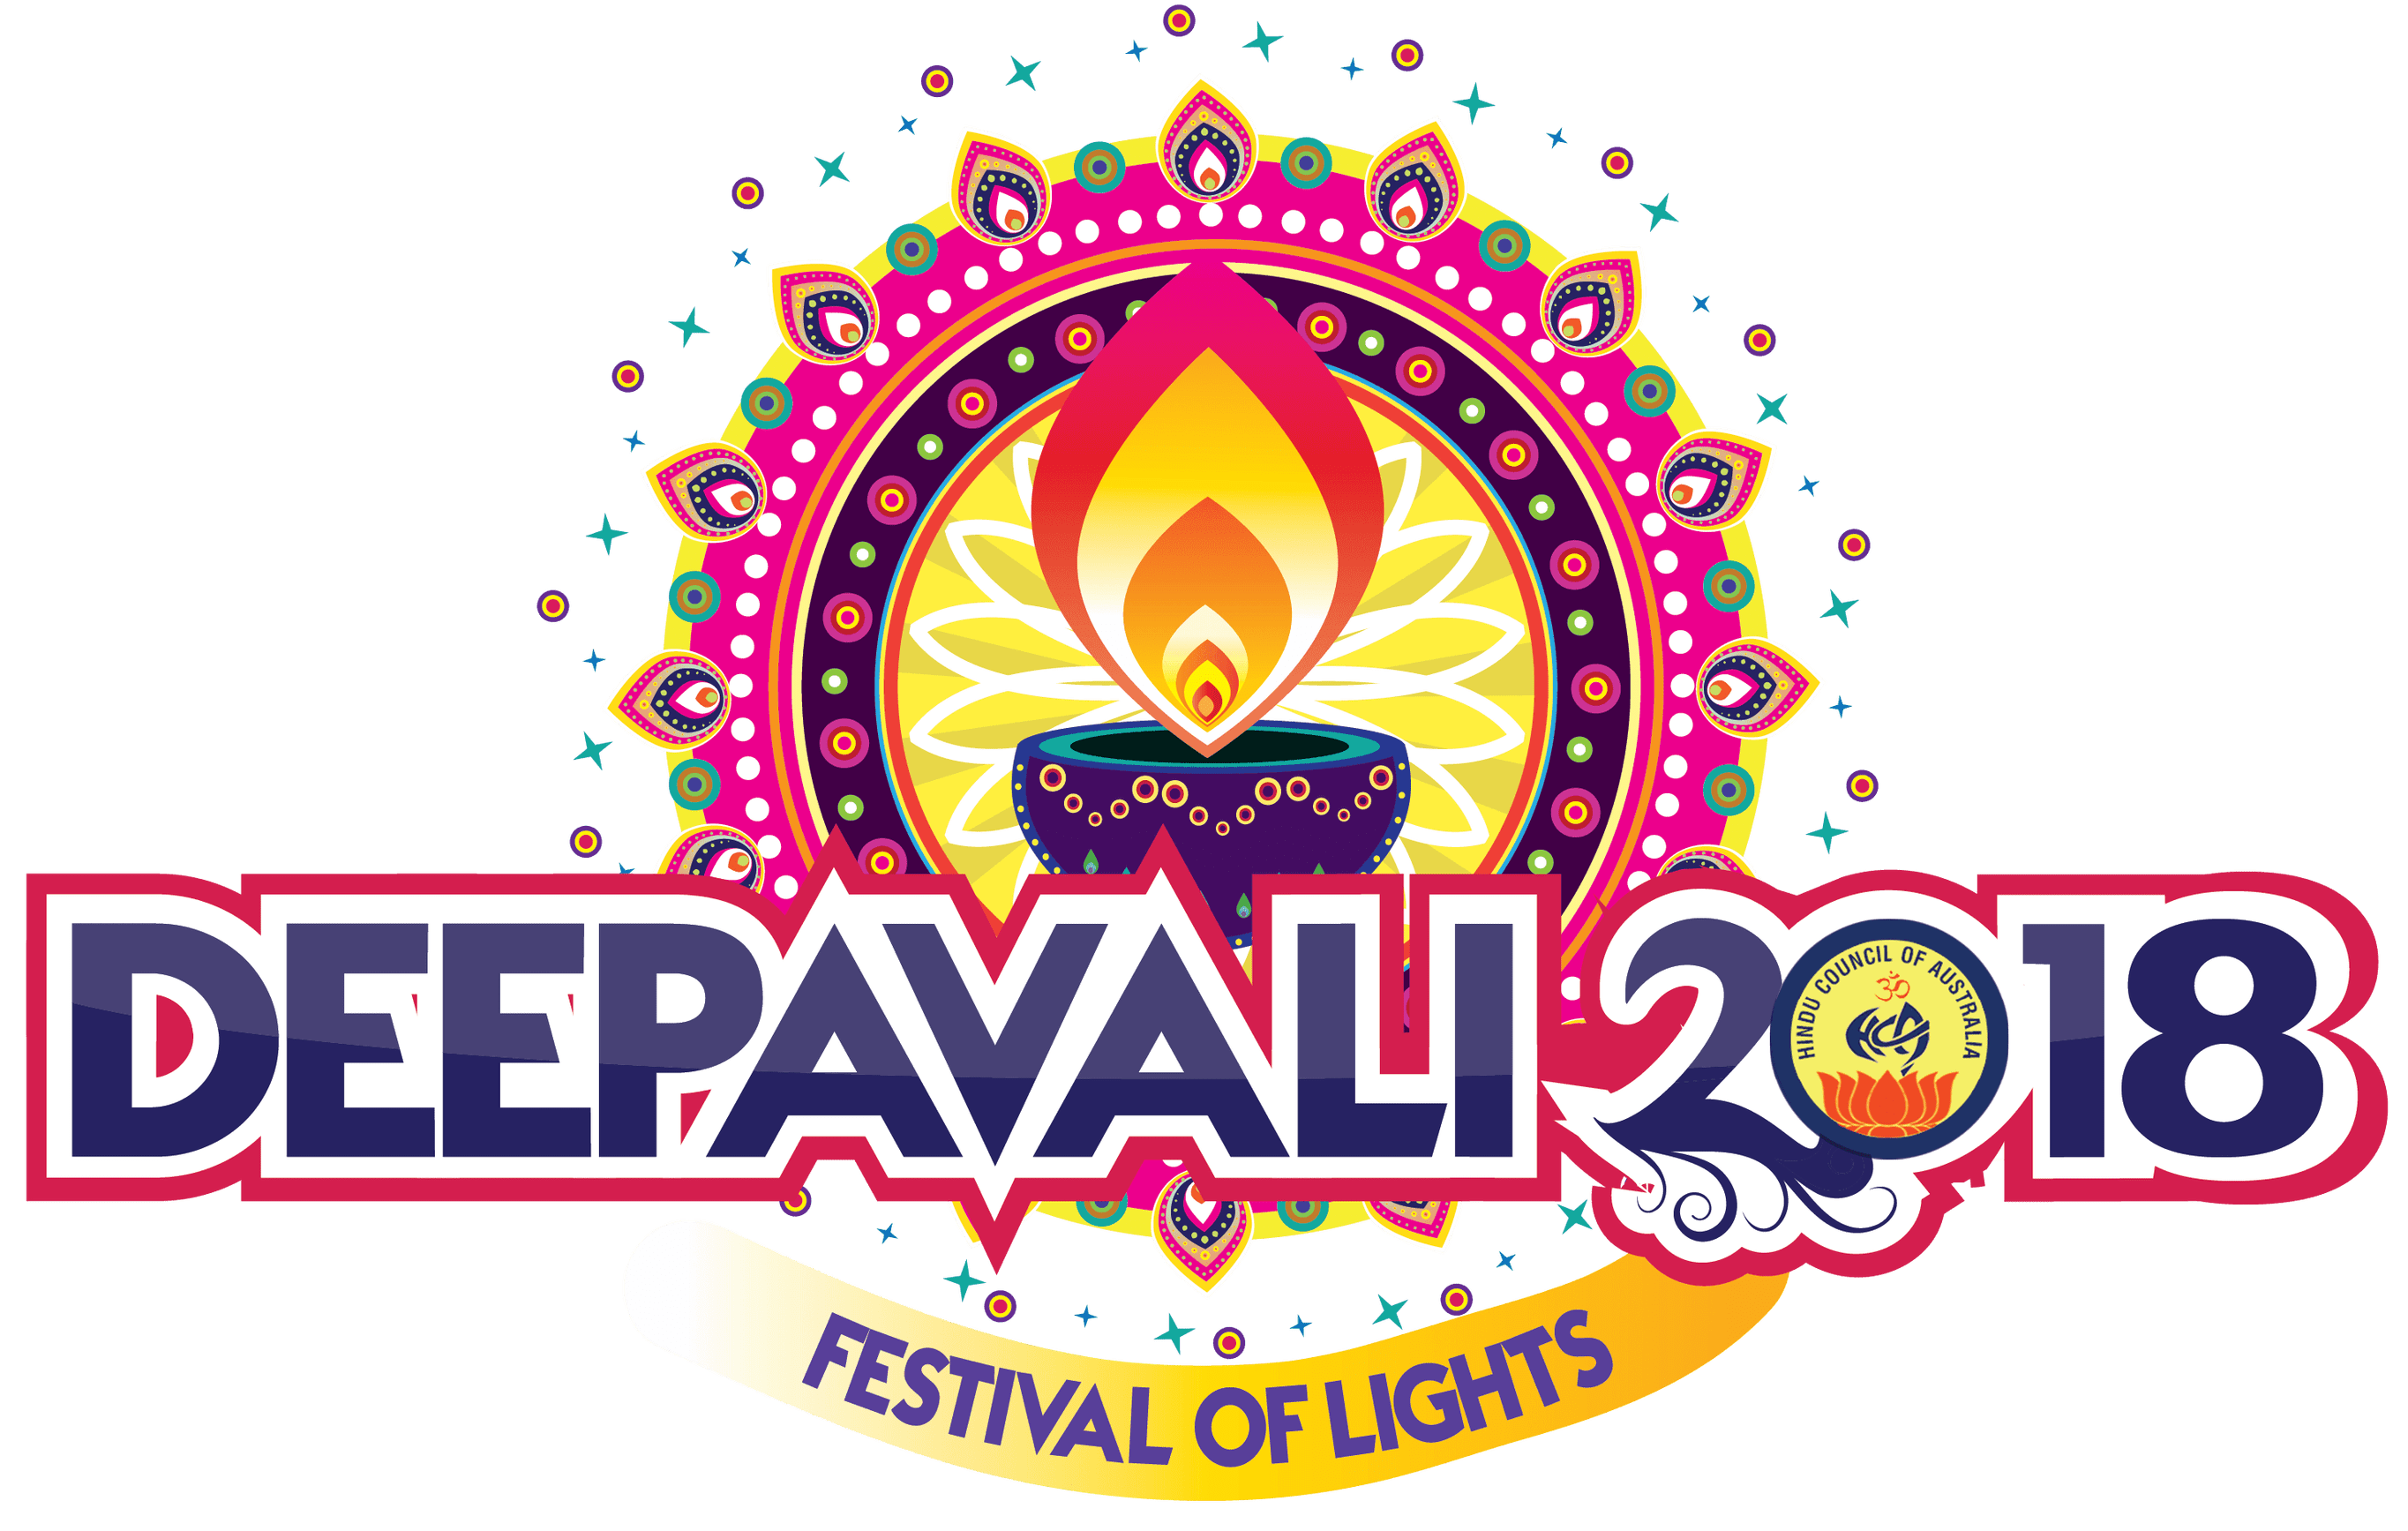 diwali 2018 festival of lights